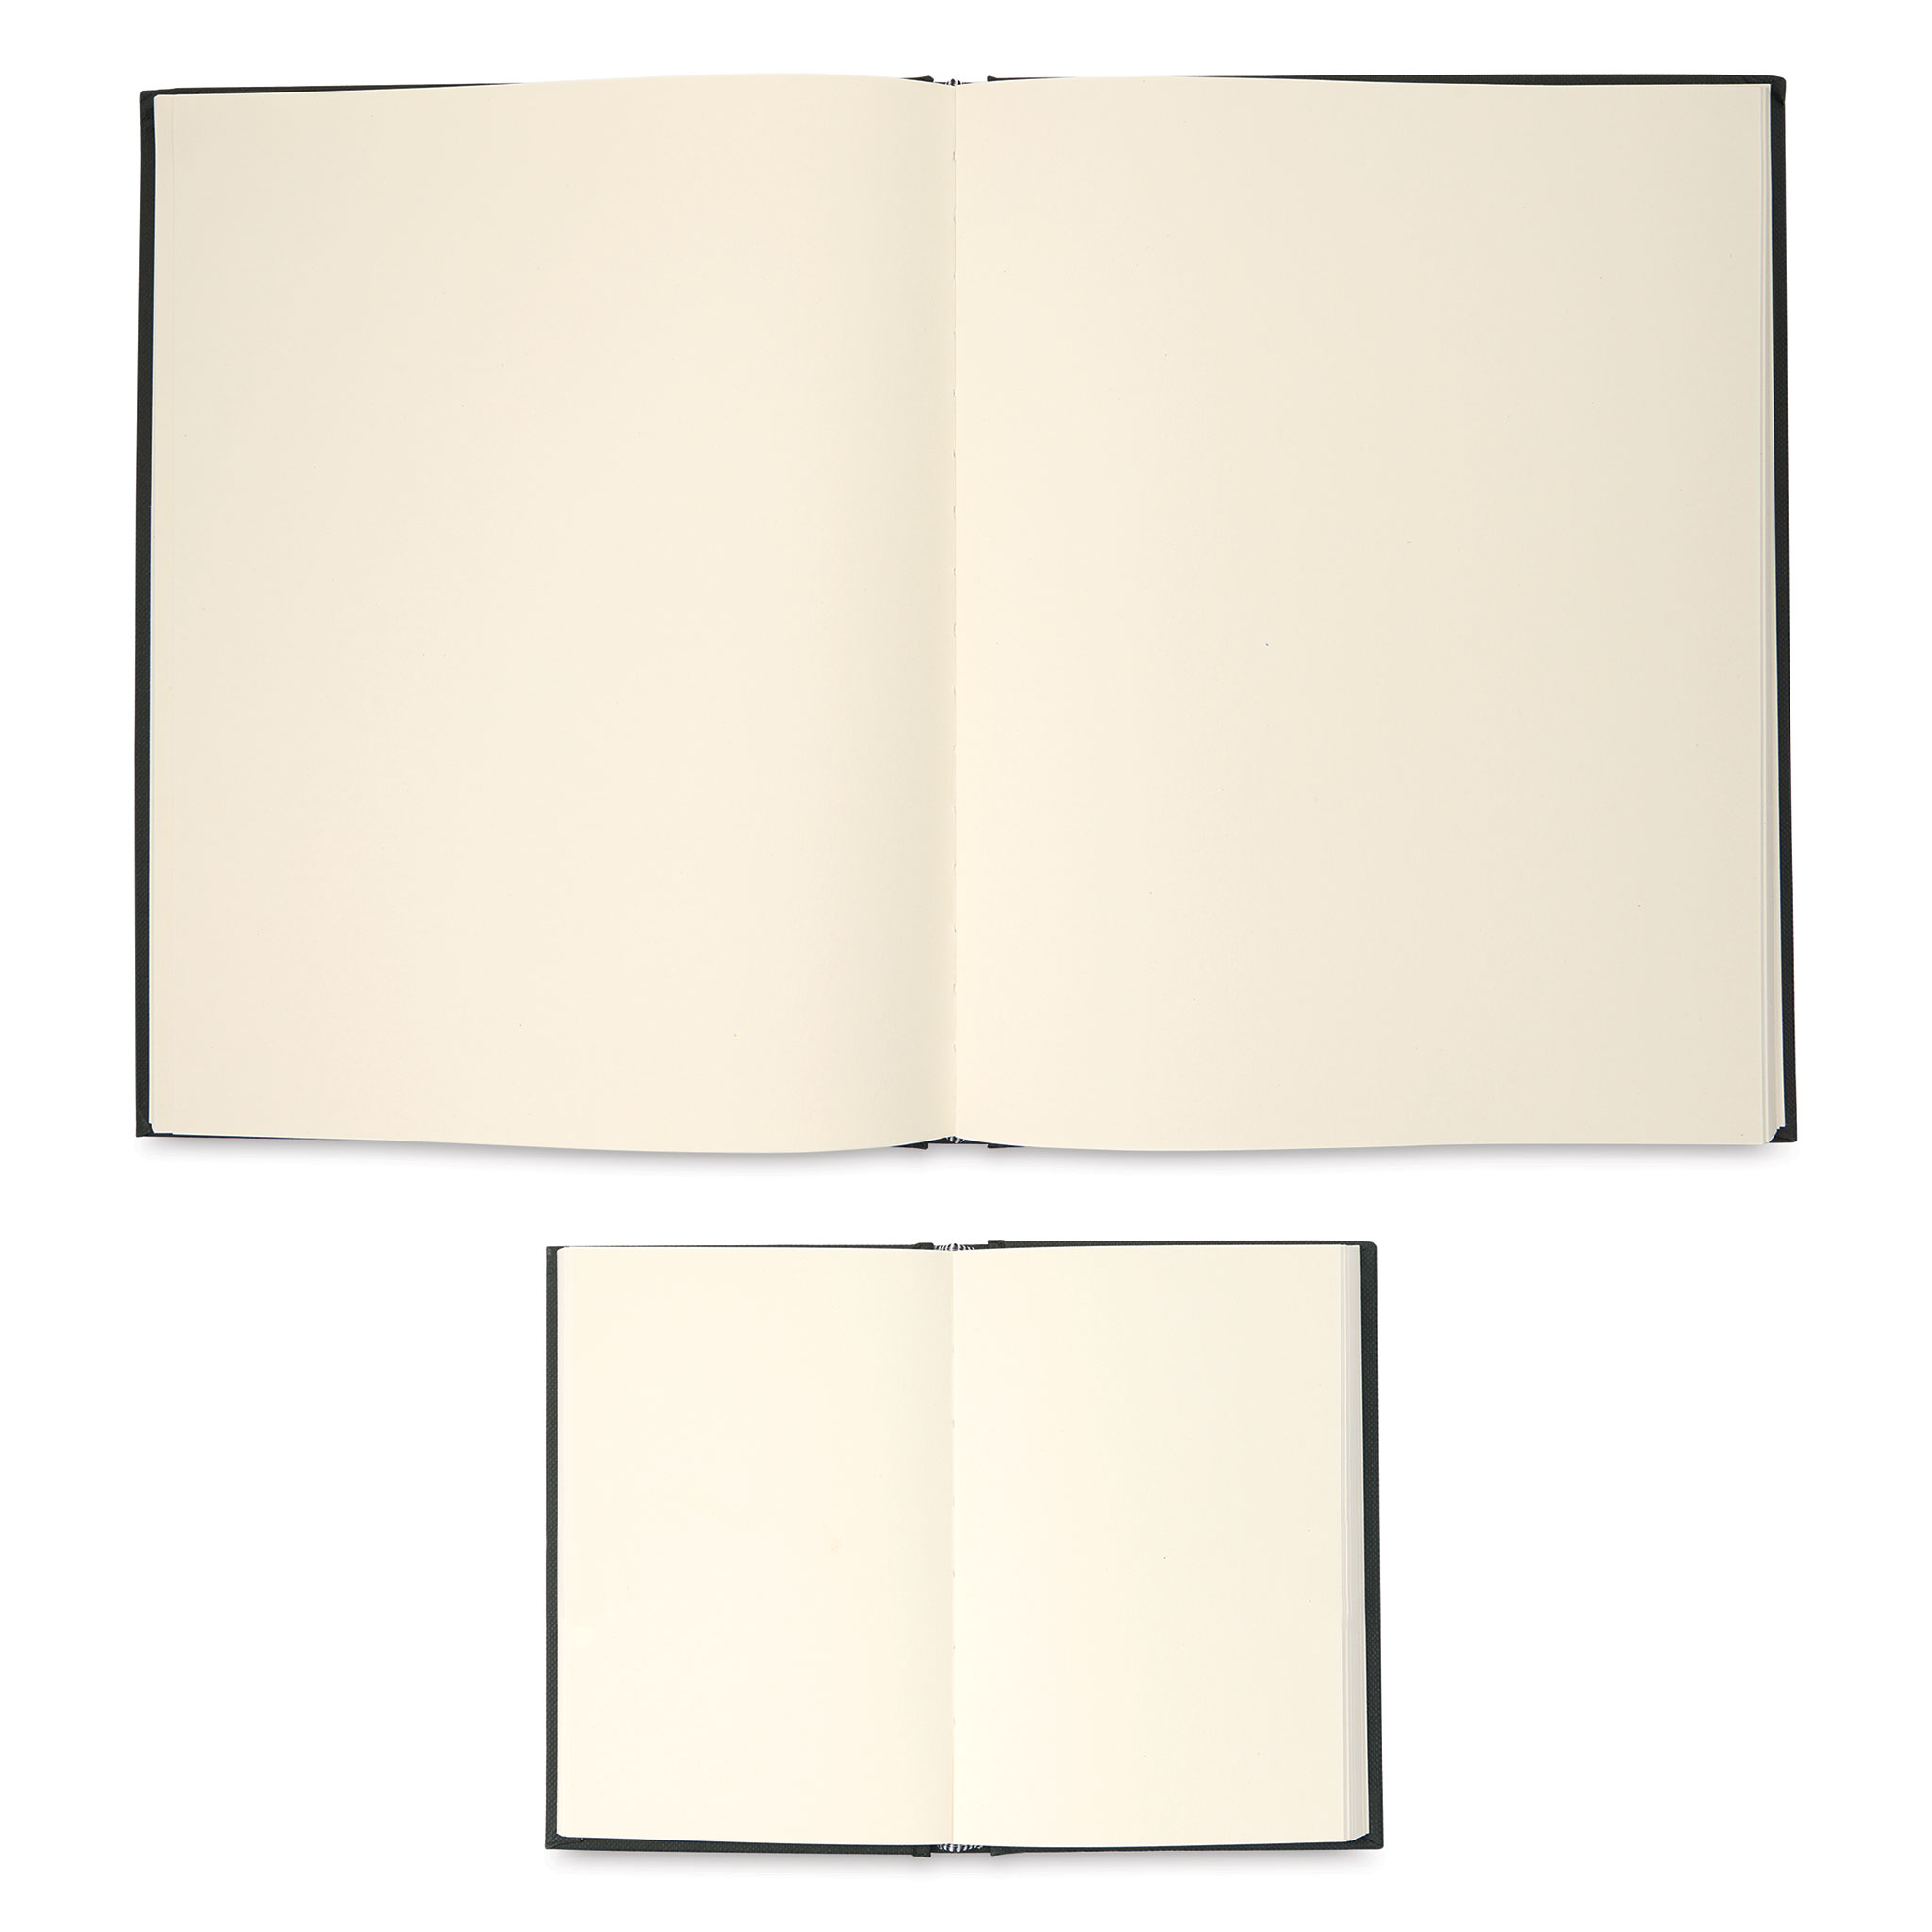 Daler-Rowney Simply Hardbound Sketchbook, White